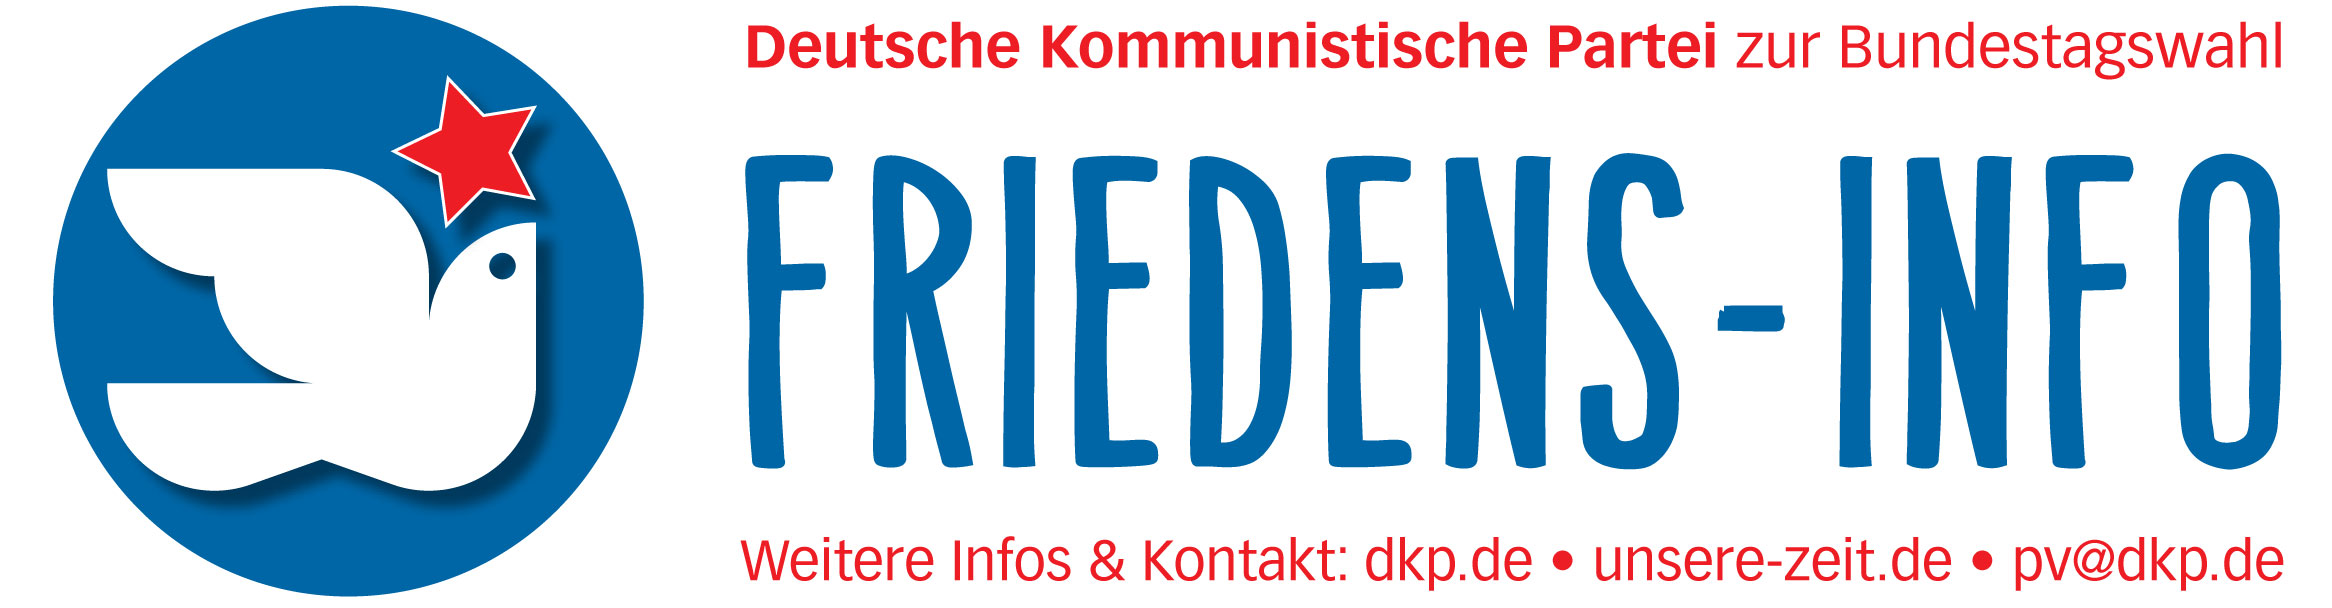 DKP Info Frieden 2021 1 - Das Bomberprogramm stoppen! - Bundestagswahl, DKP, Friedenskampf - Blog